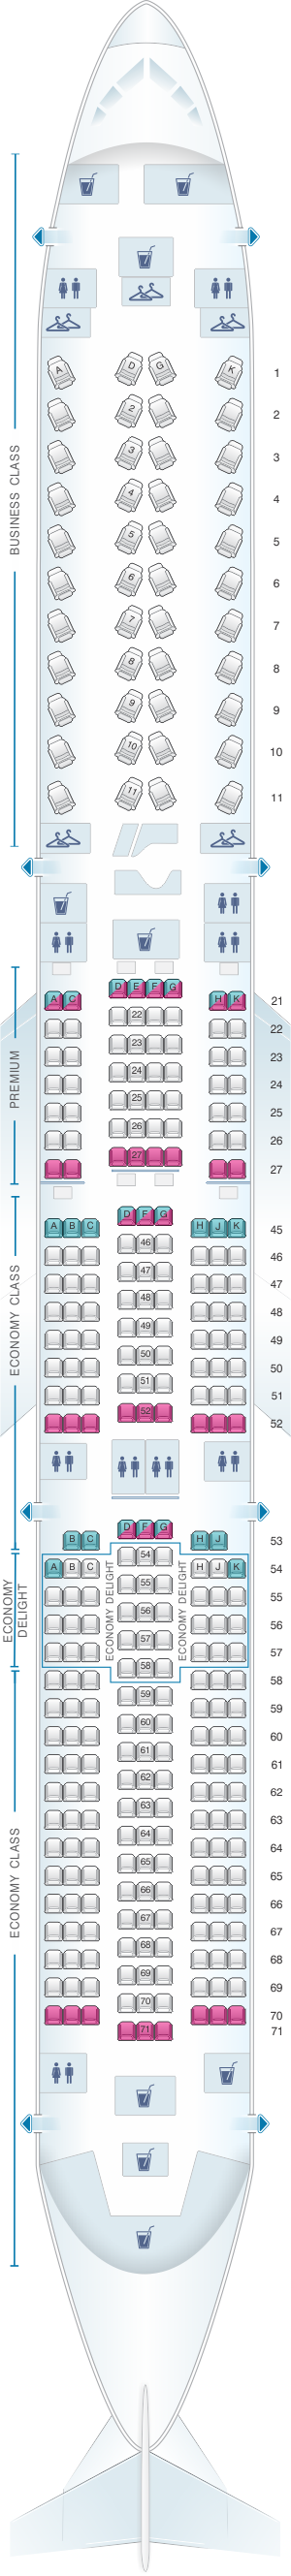 Airbus A350 1000 Seat Map Image To U